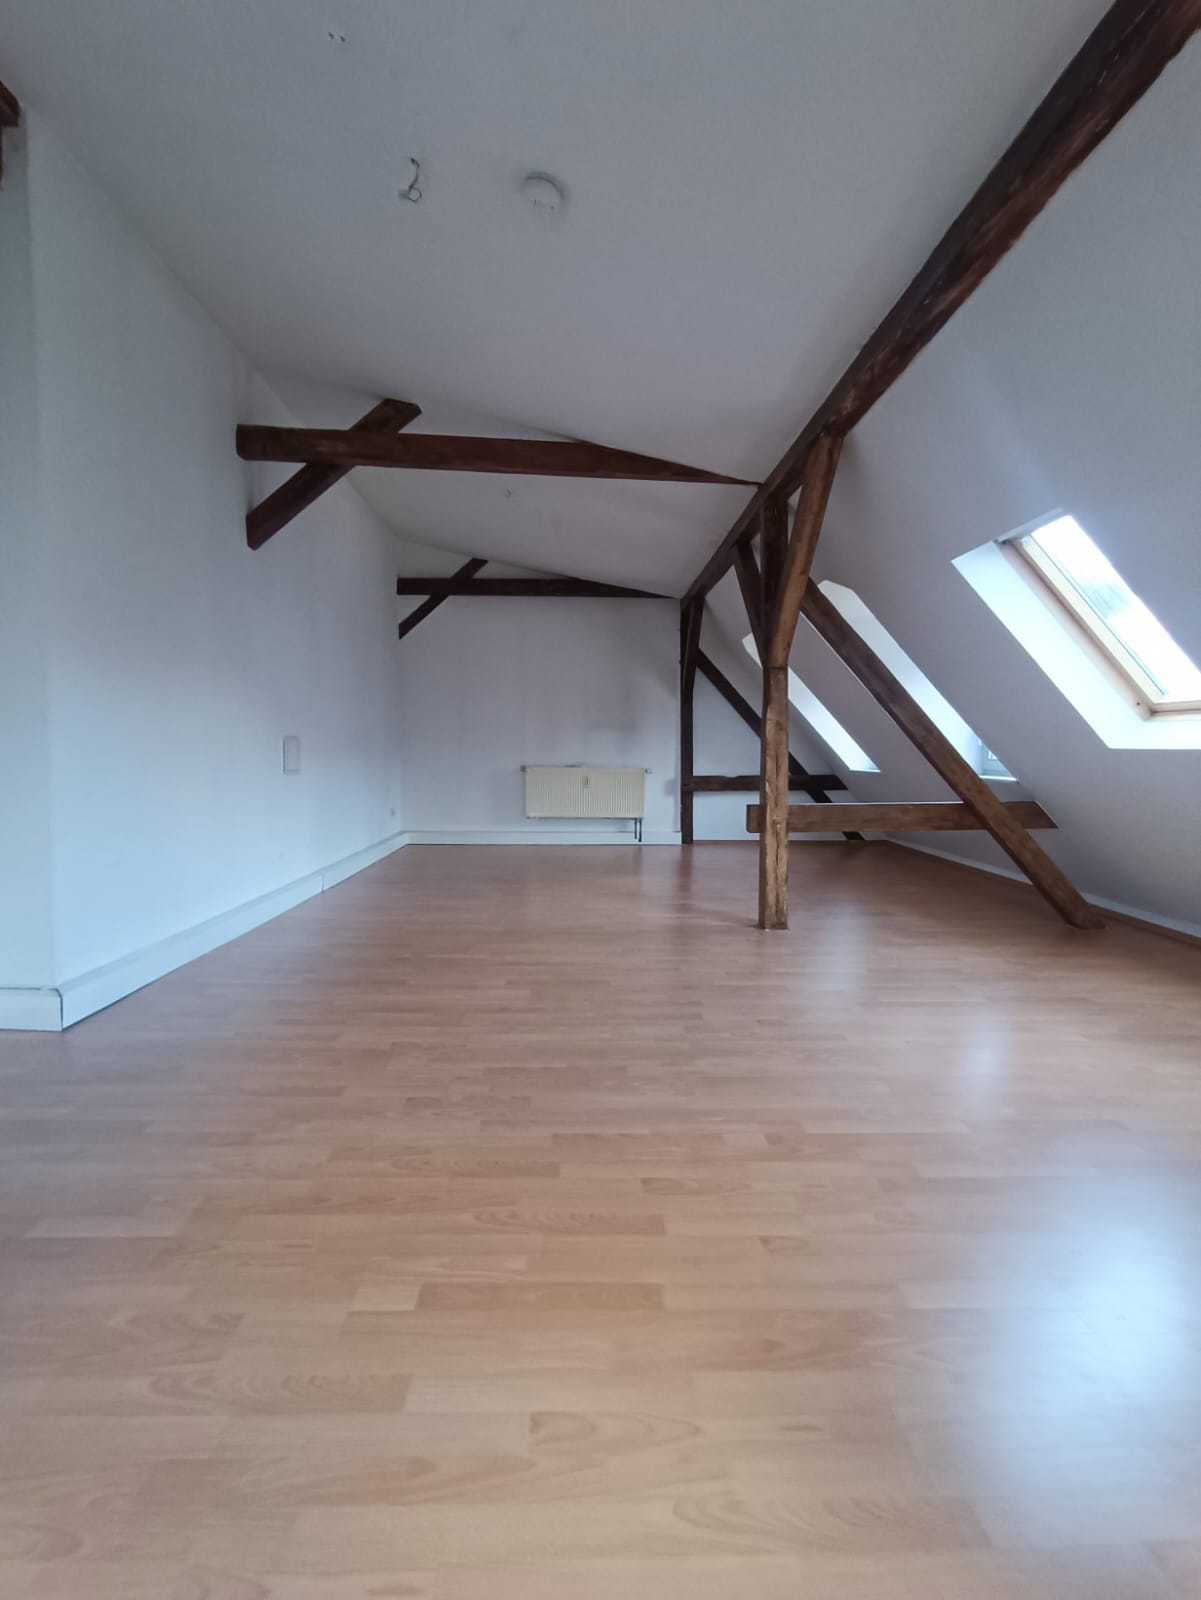 Wohnung zur Miete 900 € 2 Zimmer 103 m² 2. Geschoss Büttelstr. 8 Neustadt Brandenburg an der Havel 14776